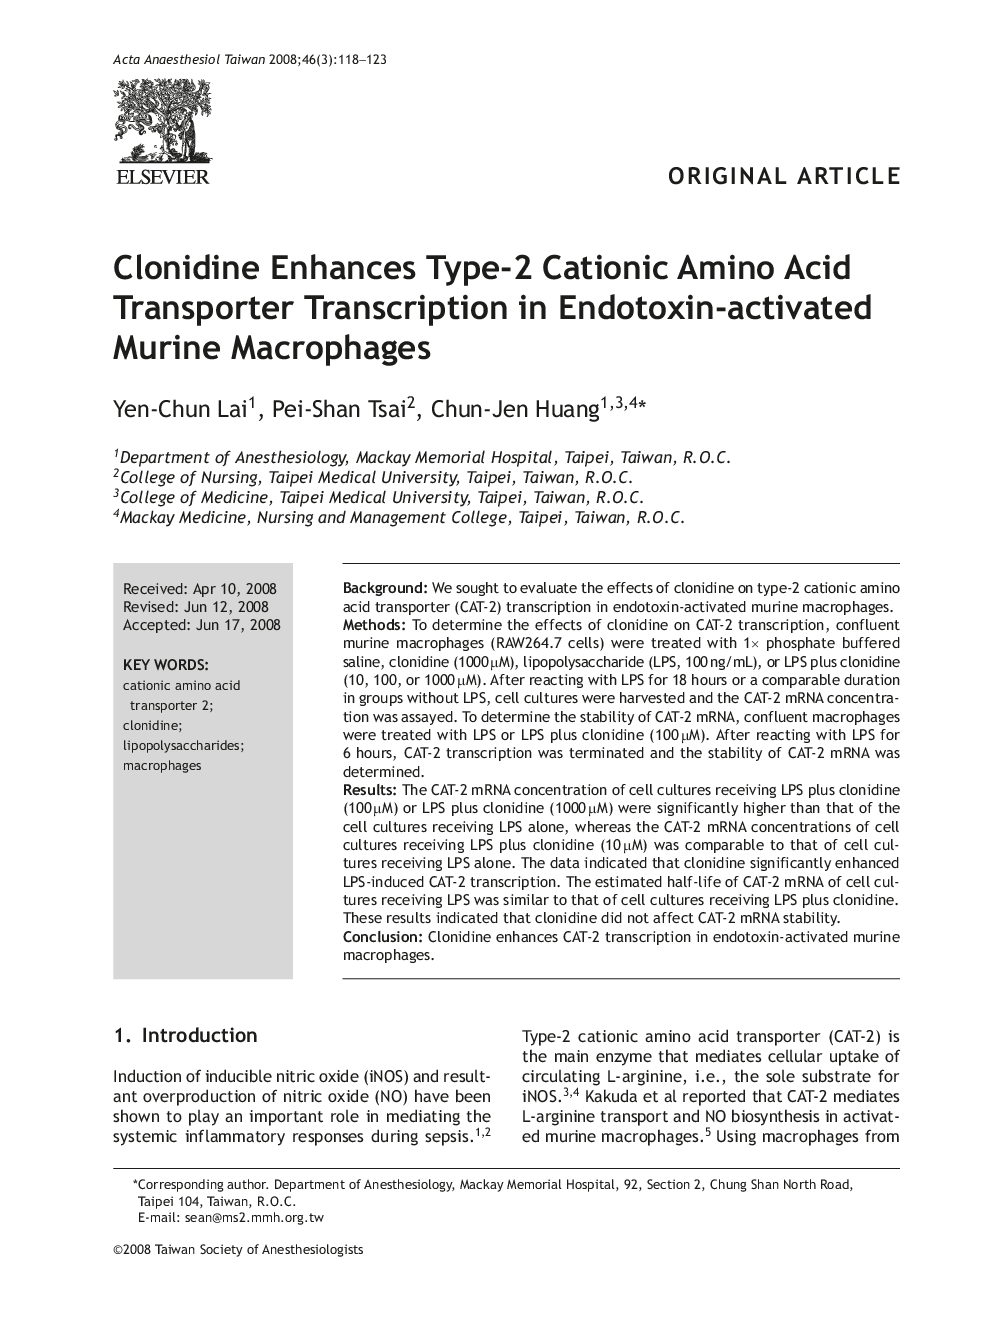 Clonidine Enhances Type-2 Cationic Amino Acid Transporter Transcription in Endotoxin-activated Murine Macrophages